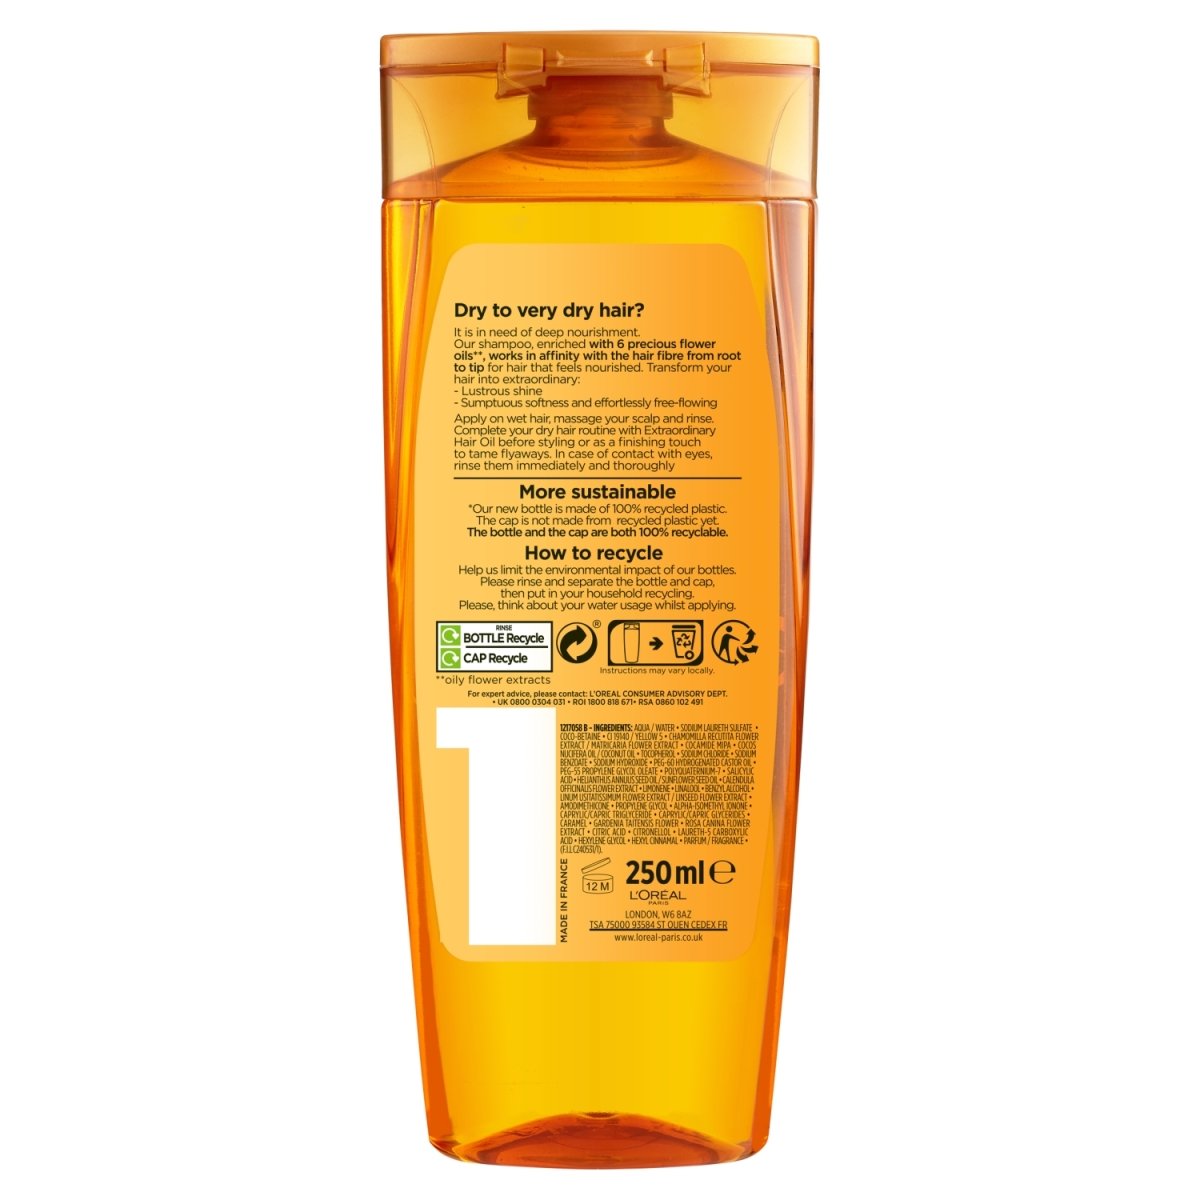 L'Oreal Elvive Extraordinary Oil Normal Shampoo - Intamarque - Wholesale 3600522448518